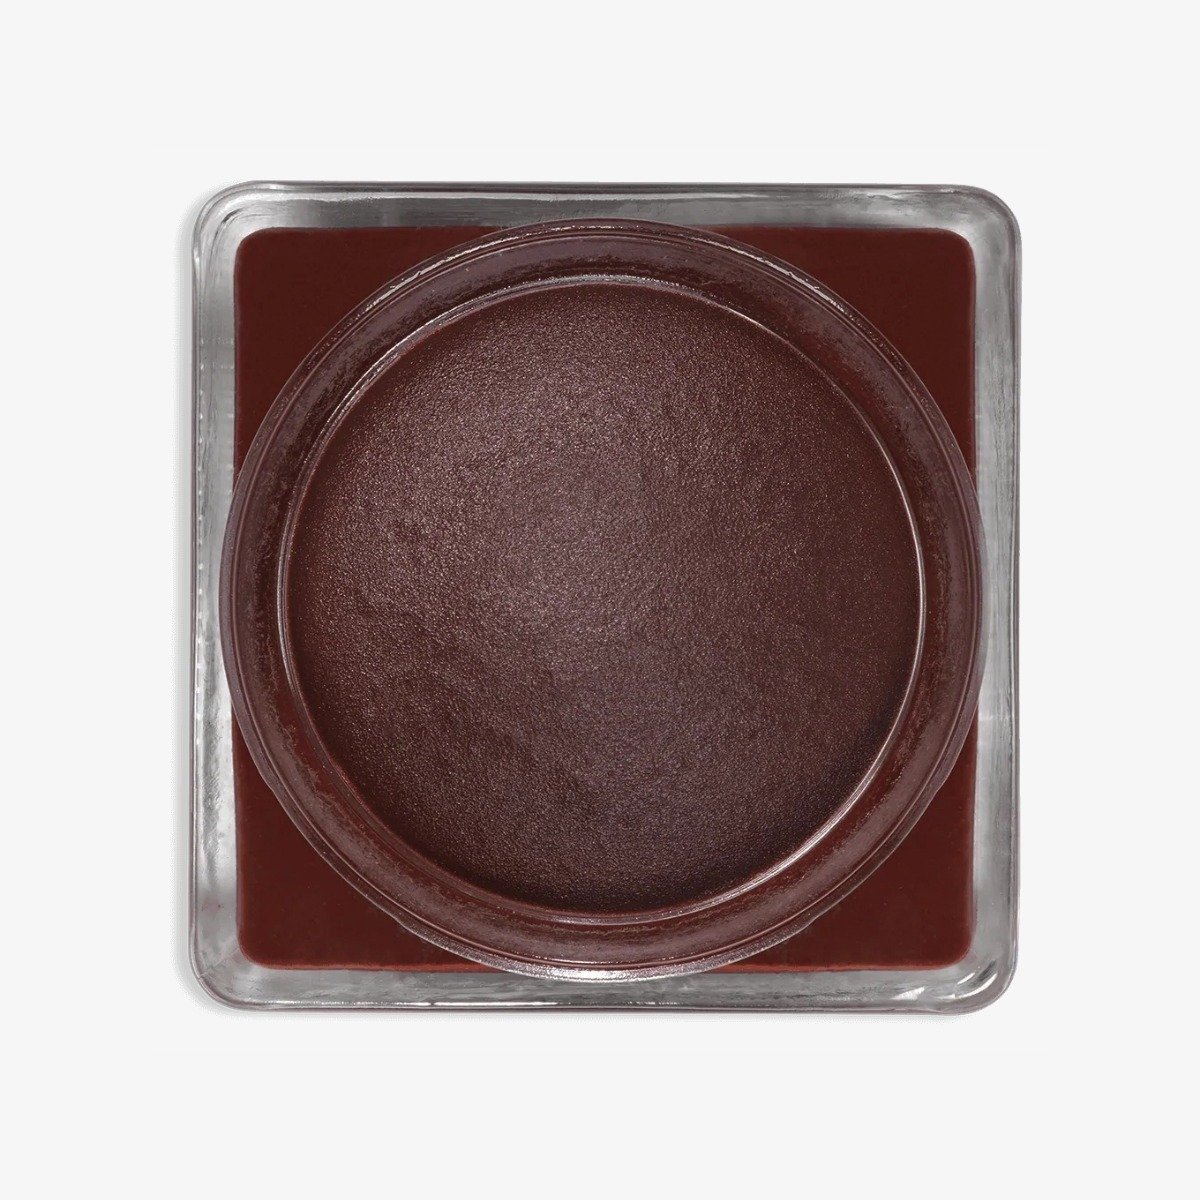 Saphir Crème 1925 mahogany leather cream